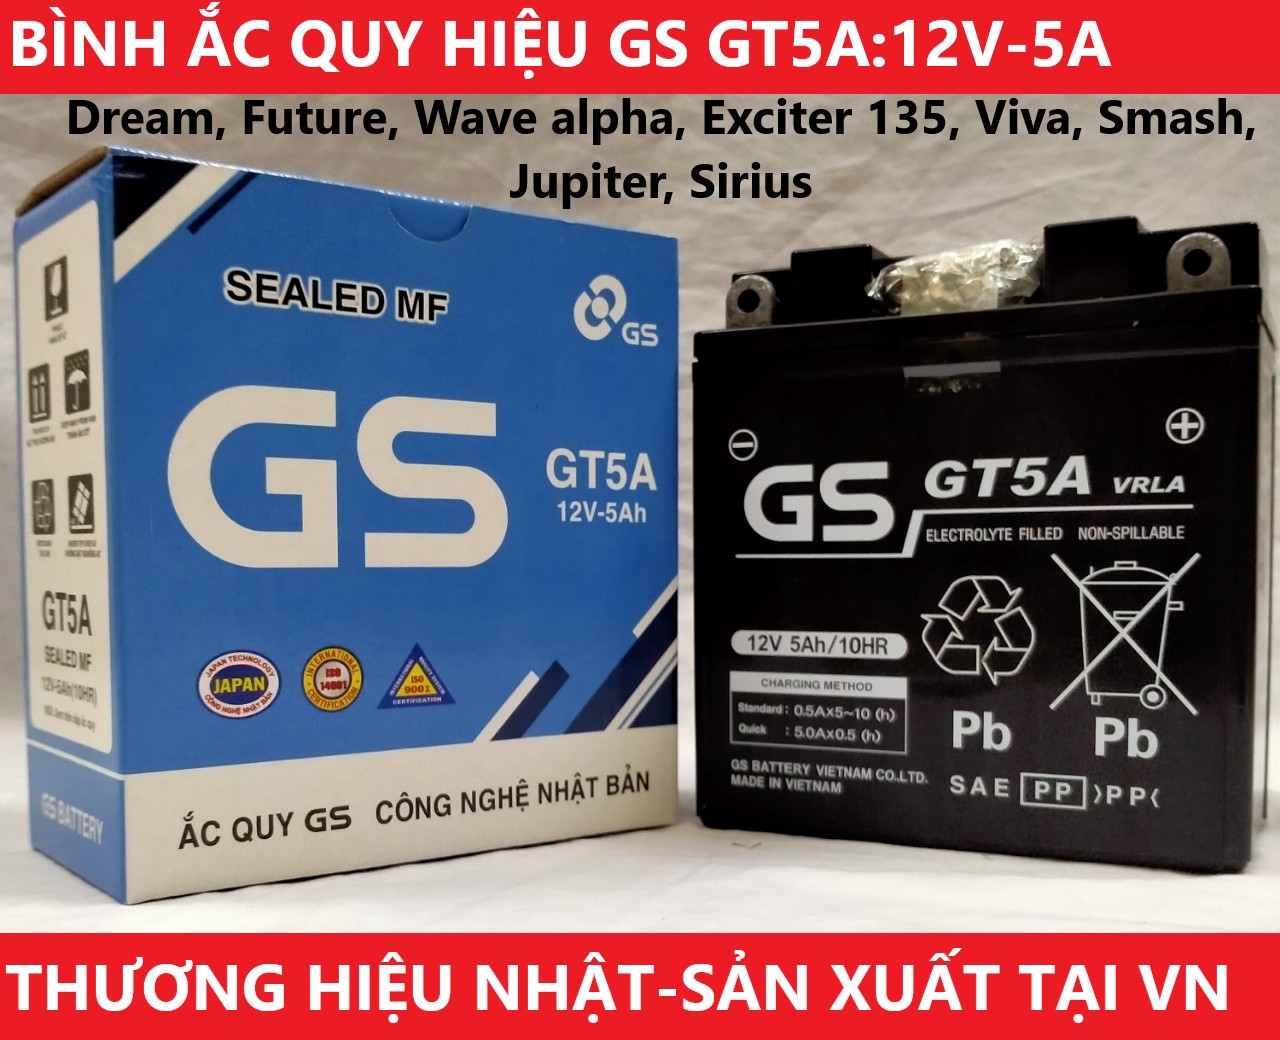 Bình ắc quy GS GT5A 12V-5AH Dream, Future, Wave alpha, Exciter 135, Viva